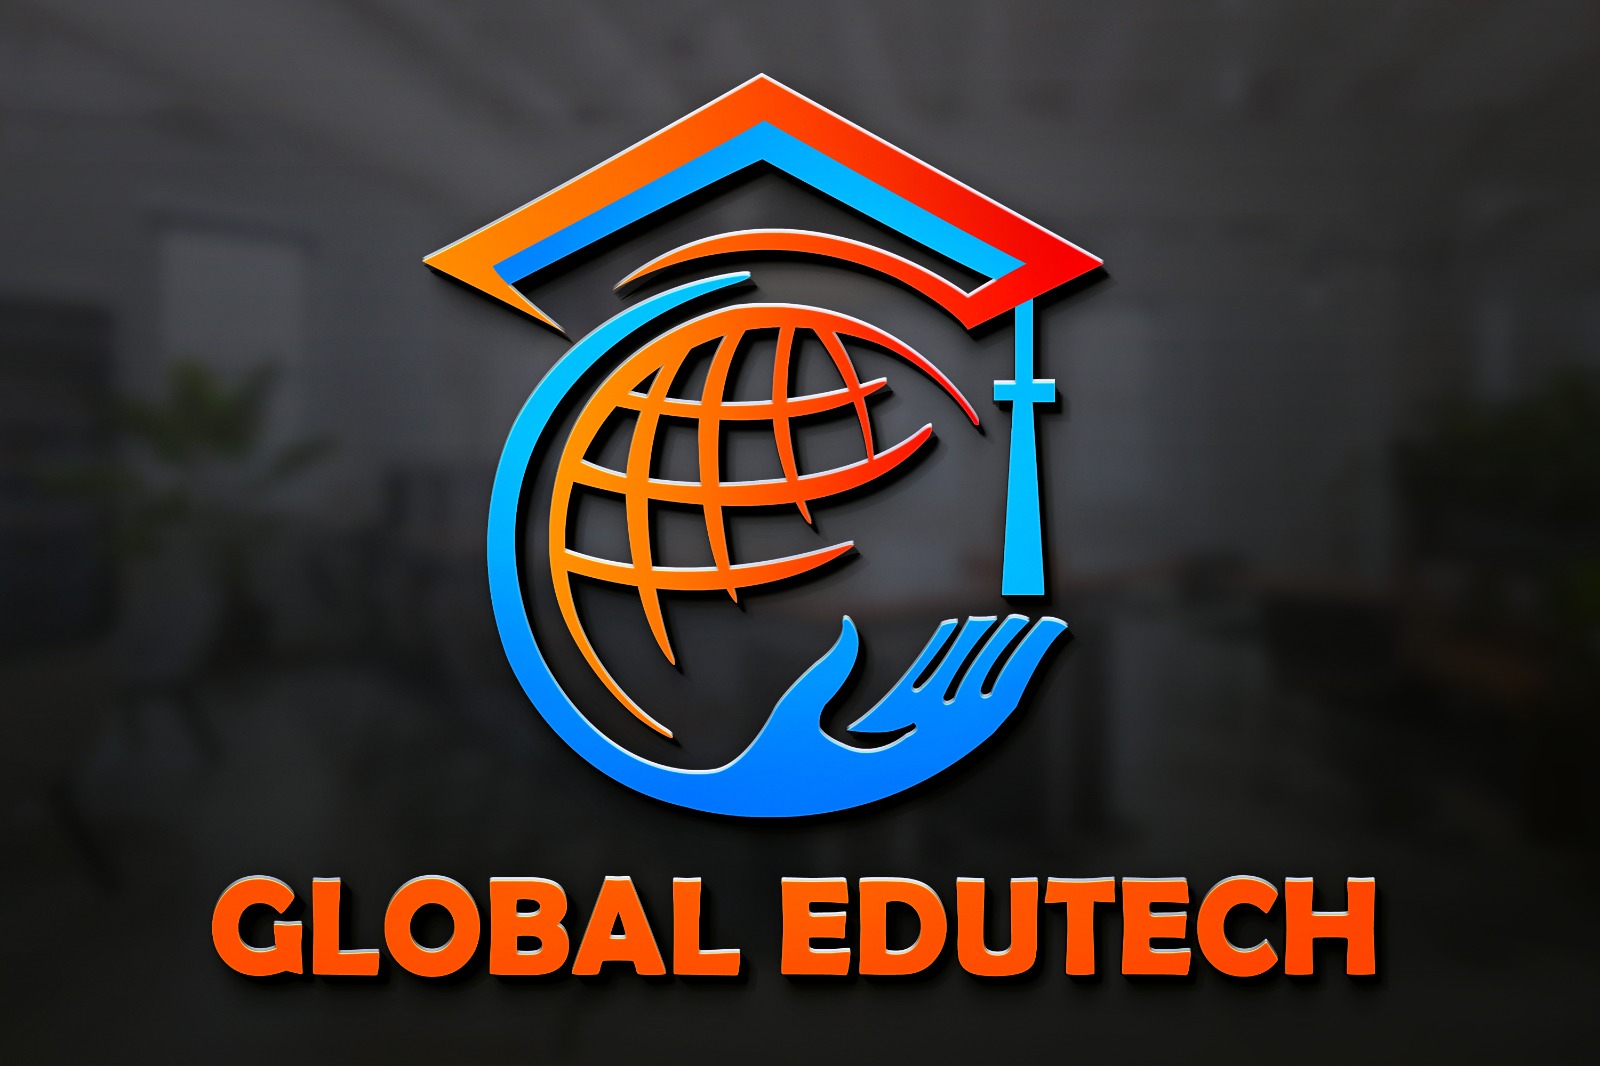 Global Edutech